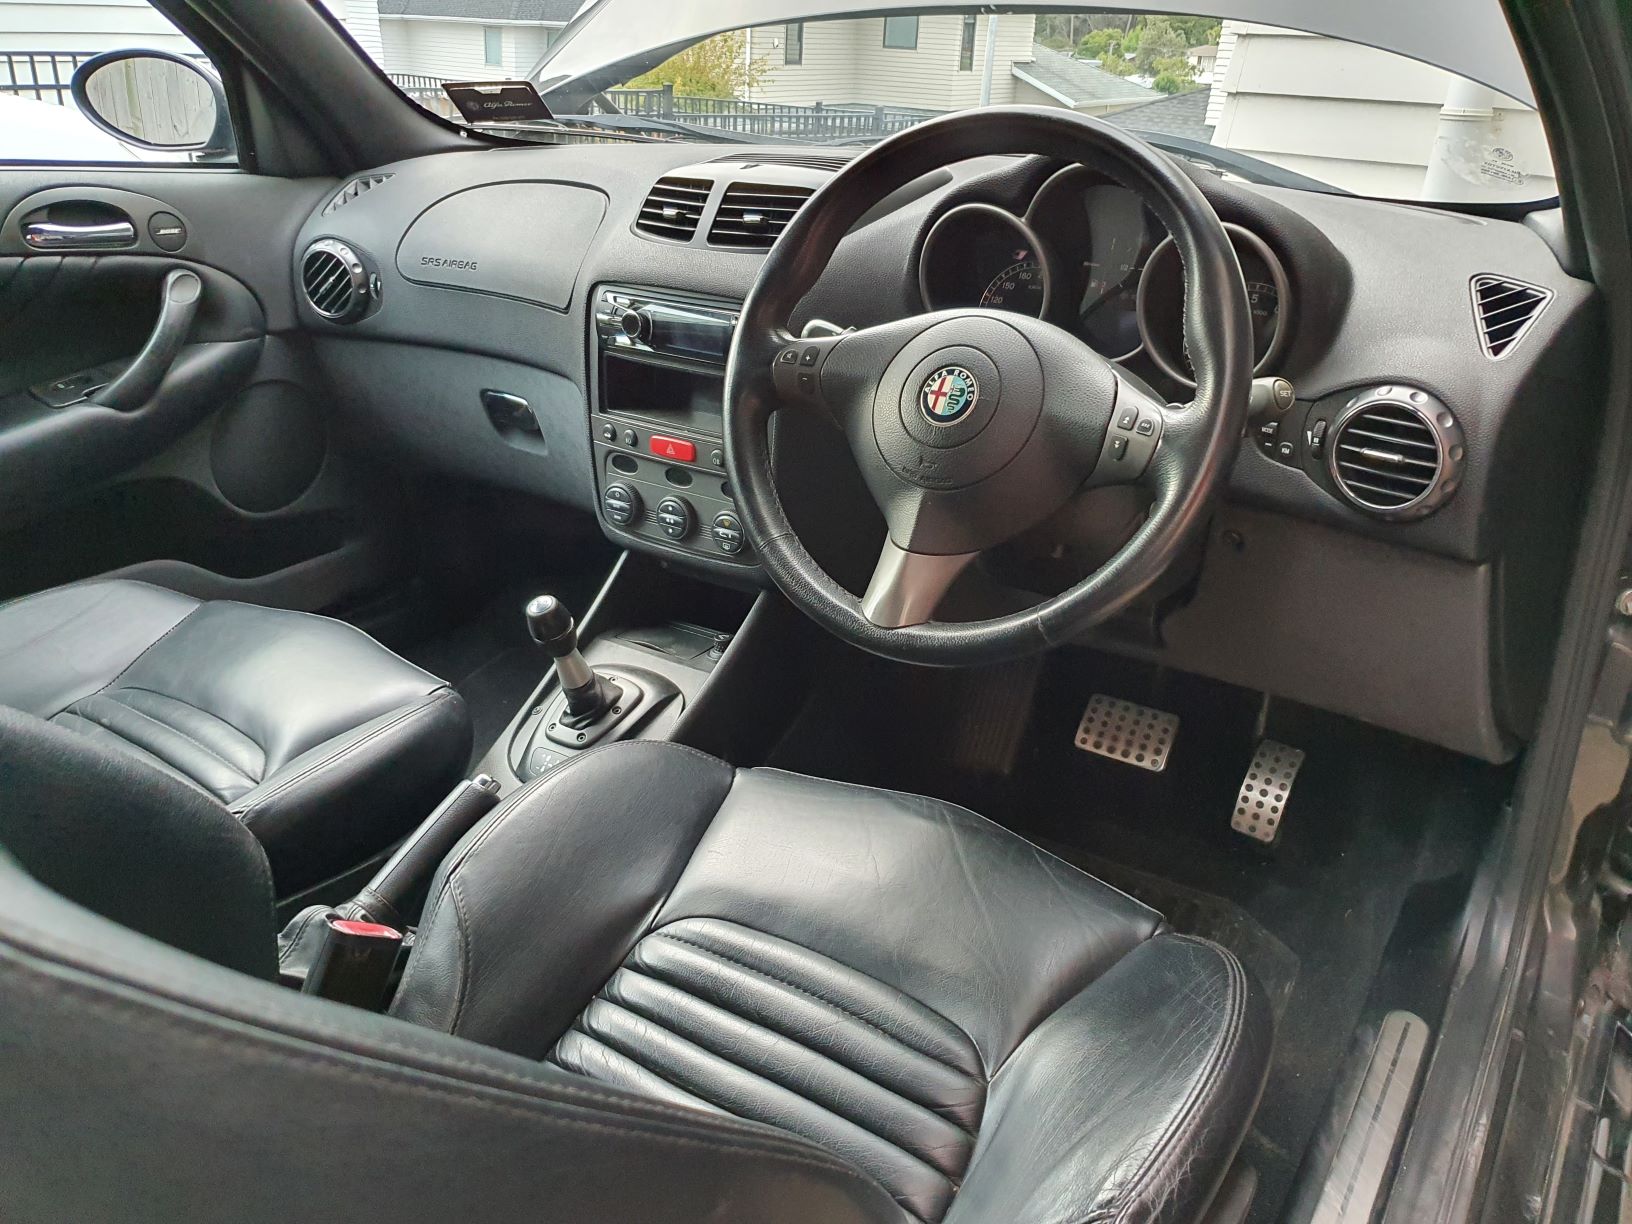 Alfa Romeo 147 GTA's interior